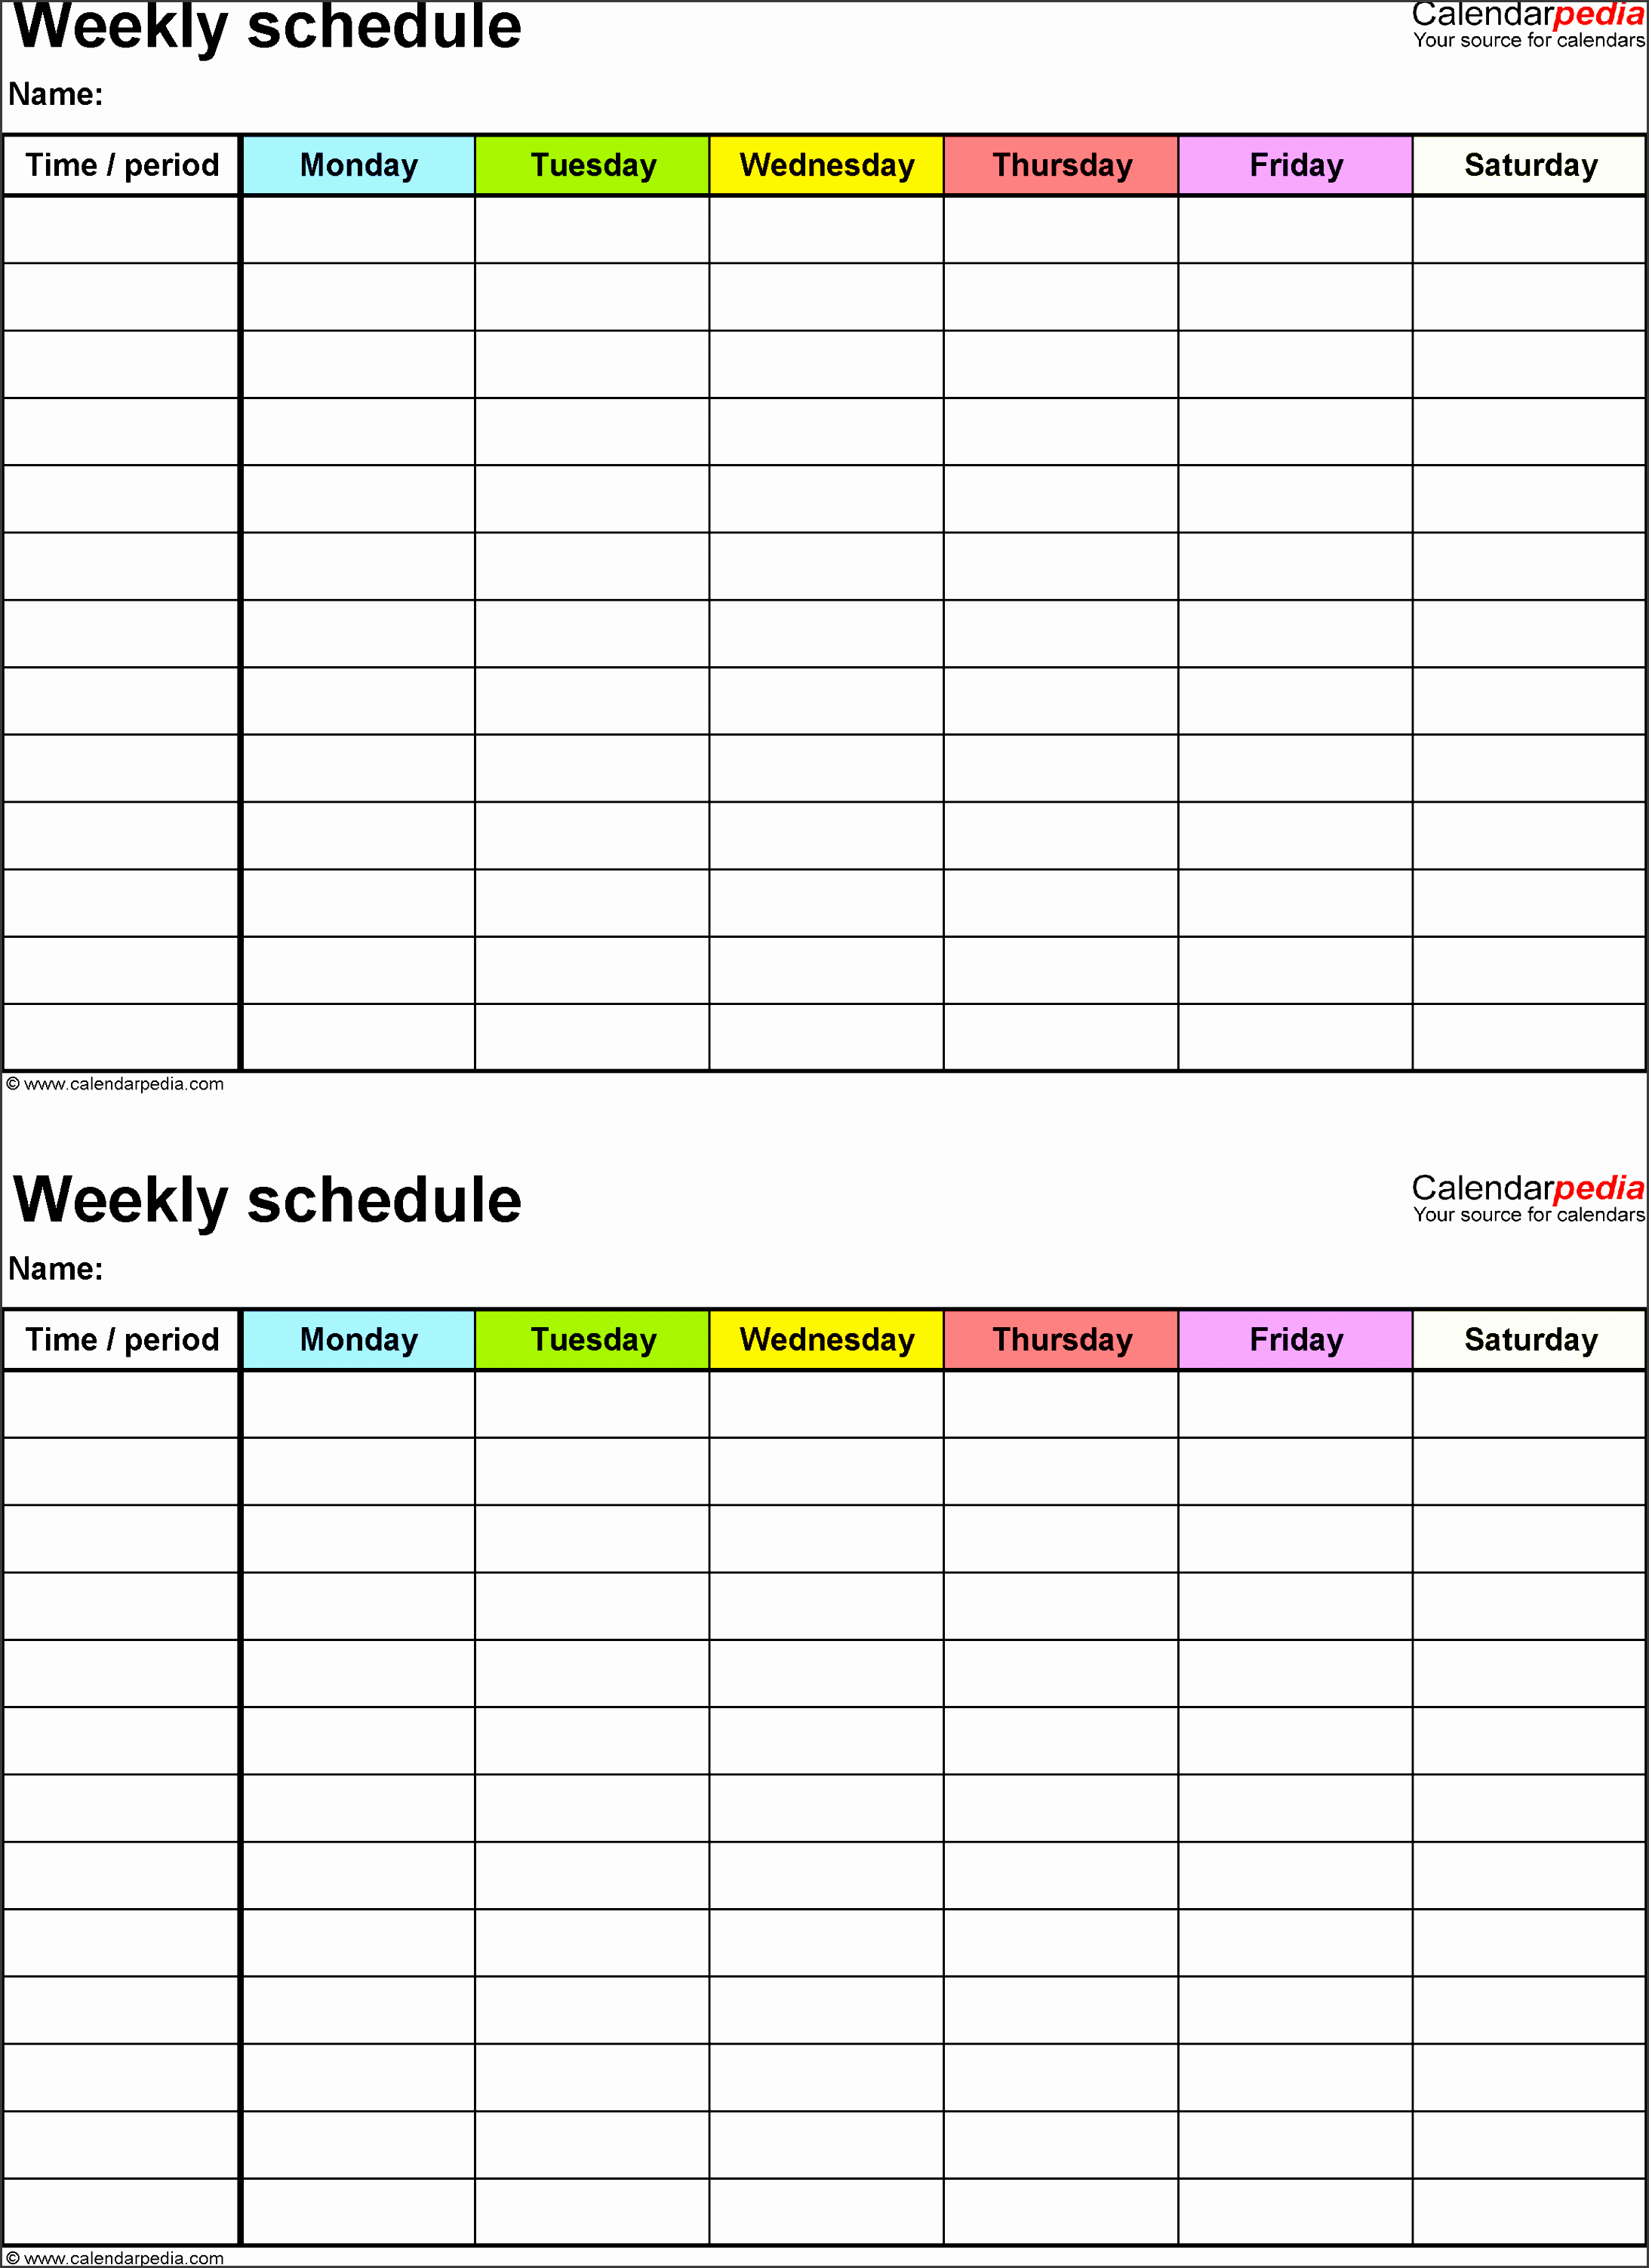 11 Editable Daily Work Schedule SampleTemplatess 